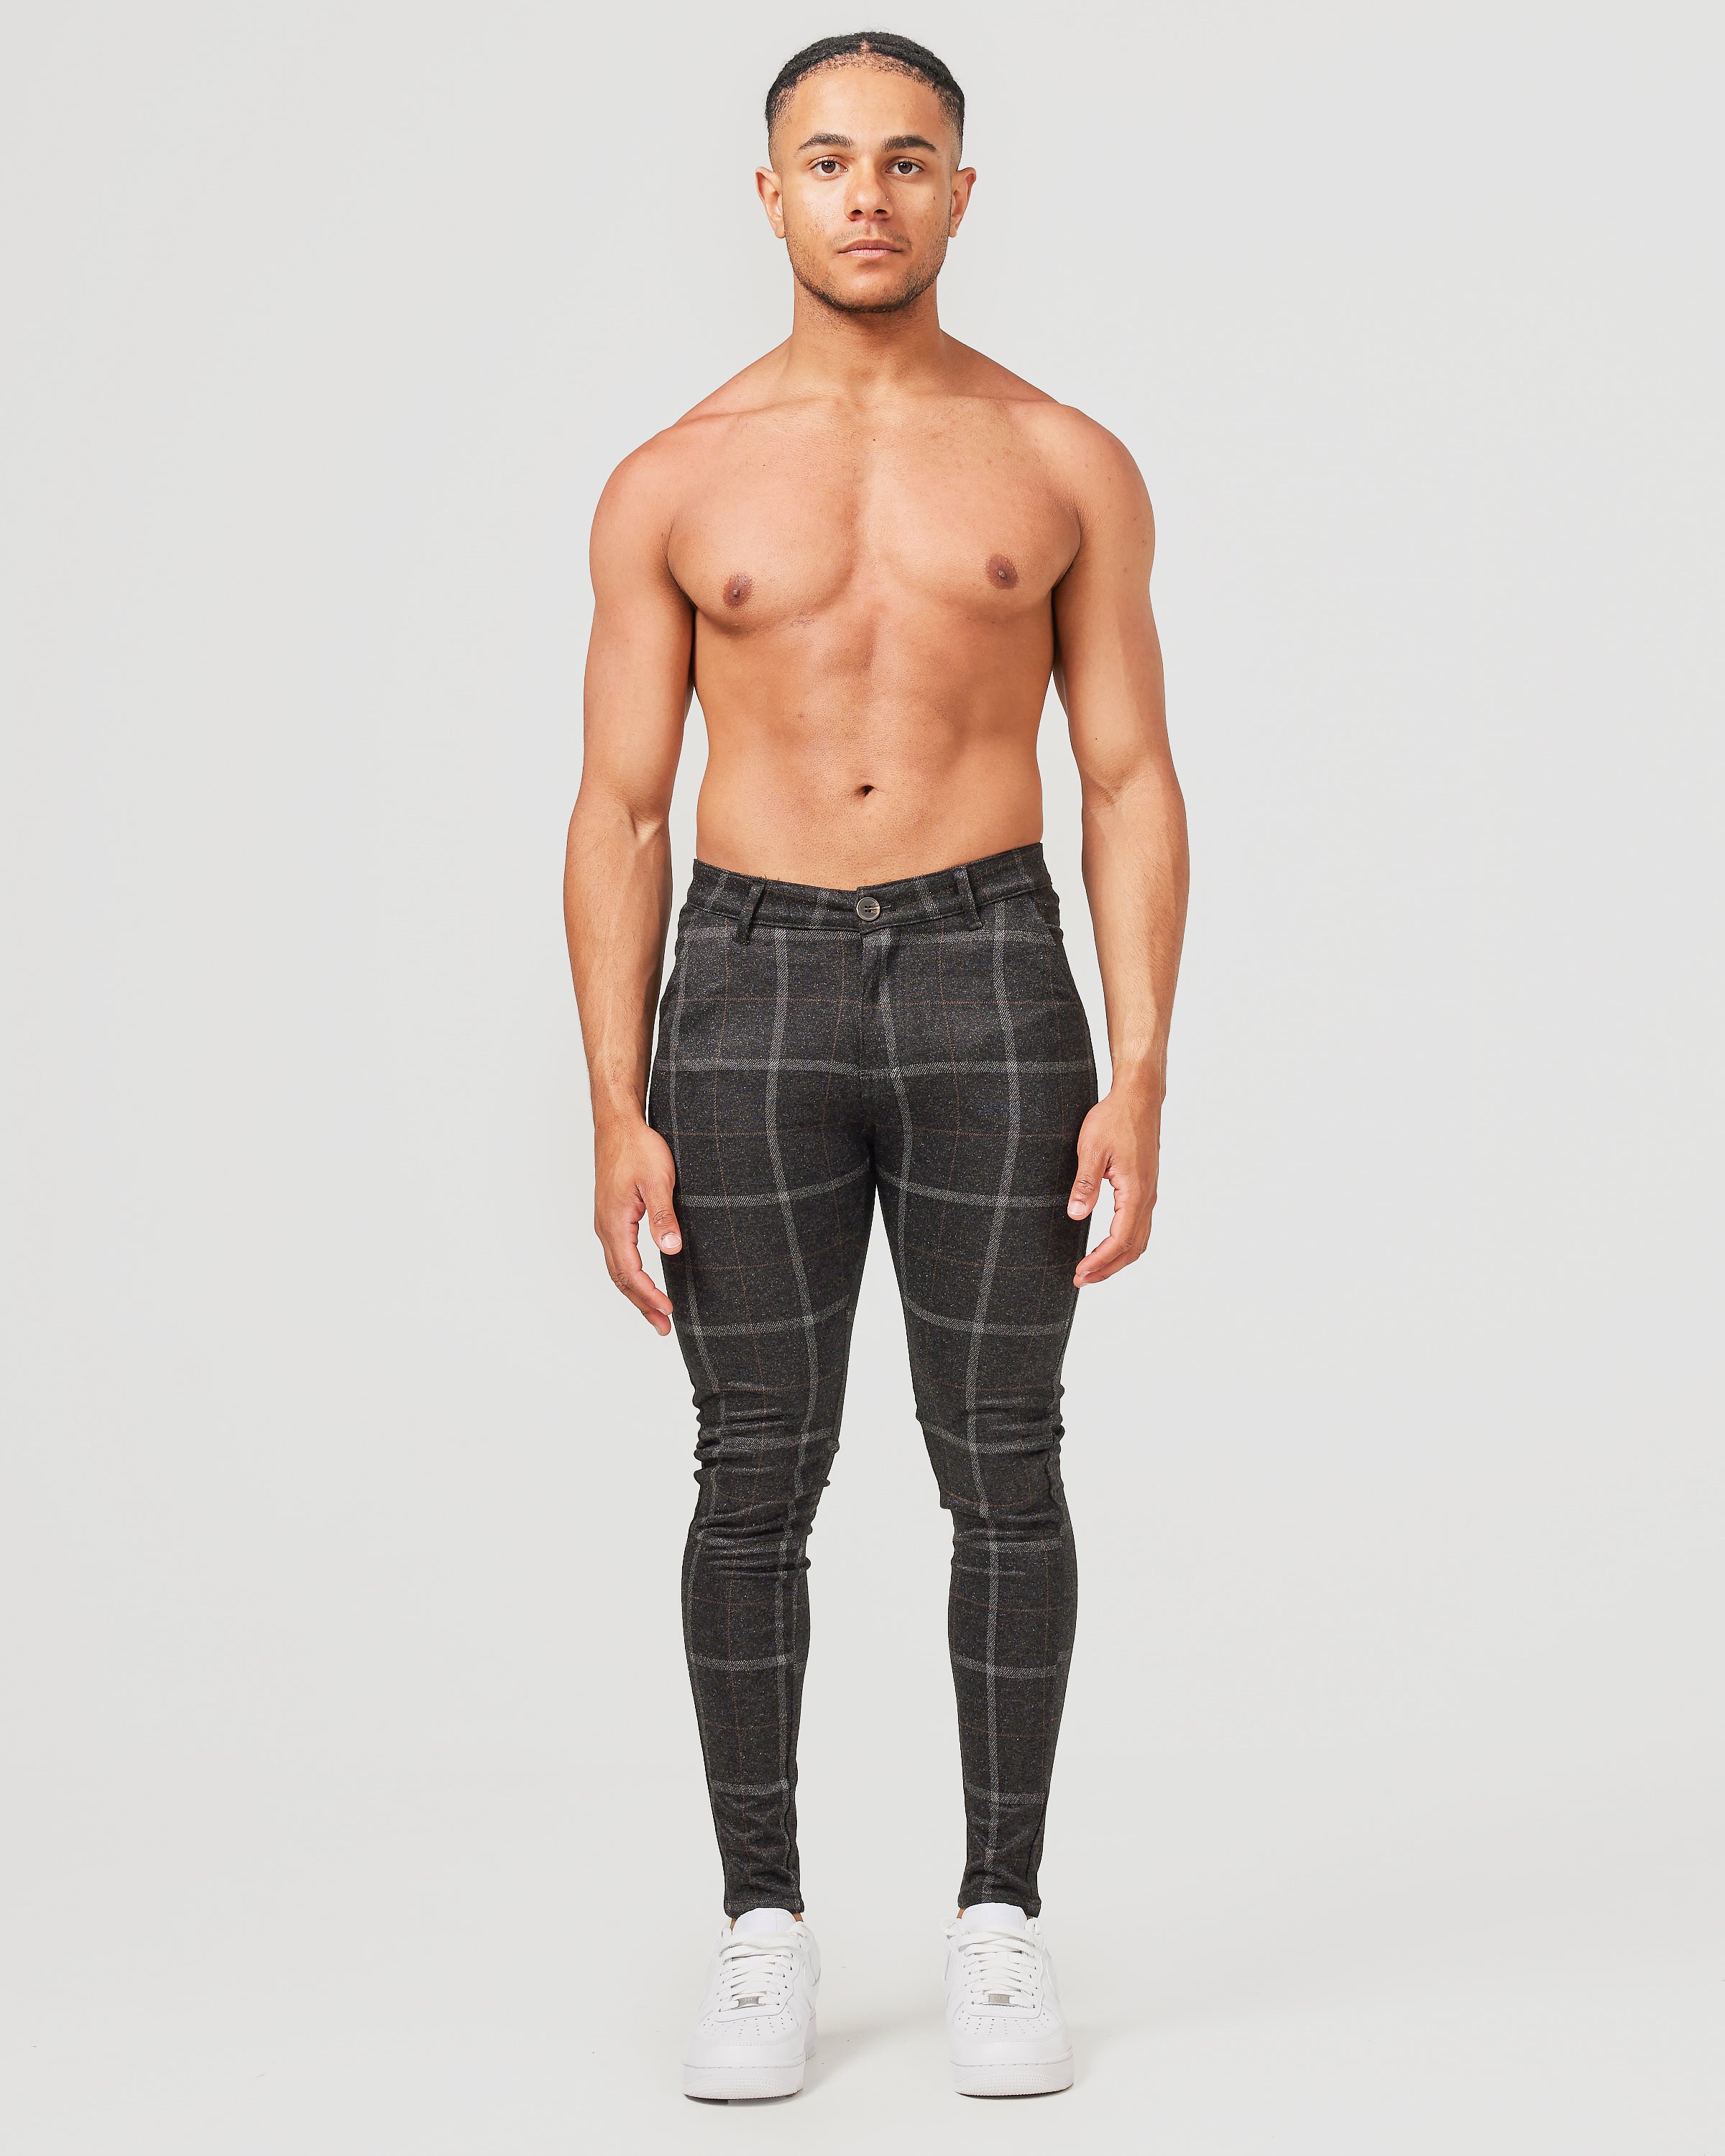 Mens Grey Plaid Pants | Gerardo Collection